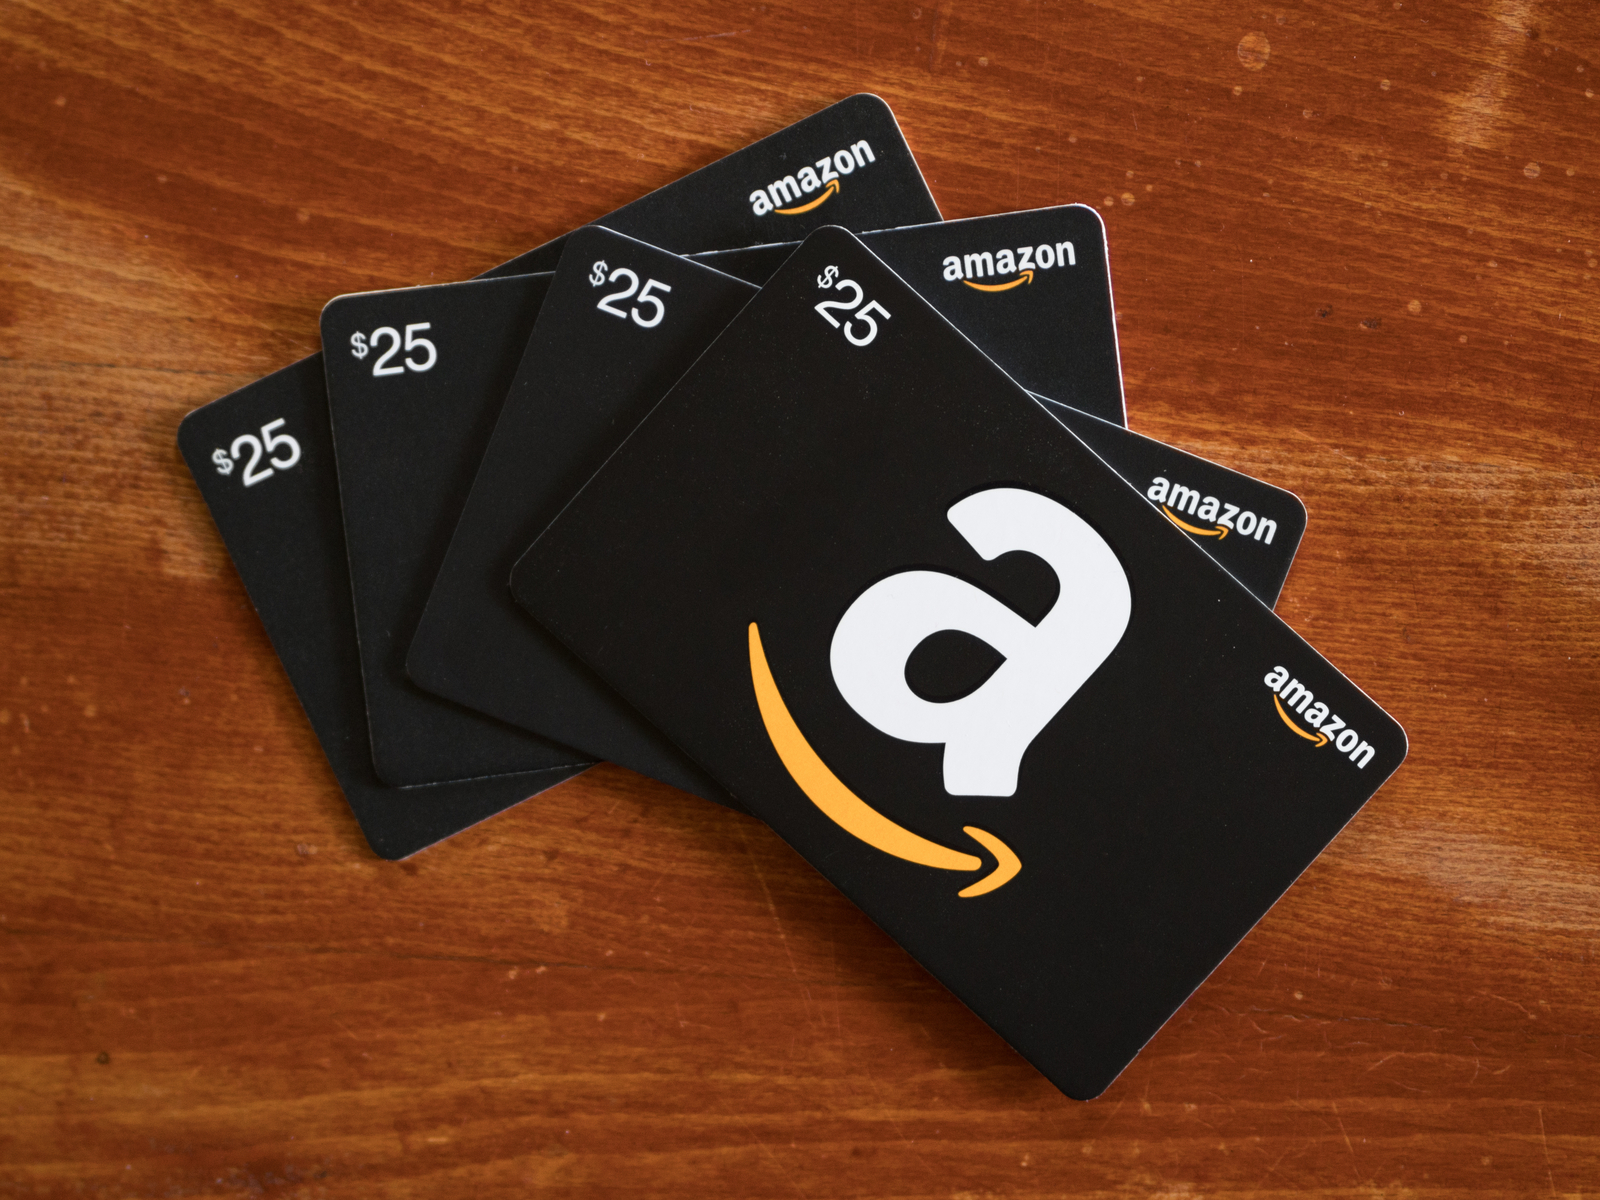 Amazon gift card with bitcoin режим работы обмена валют москва